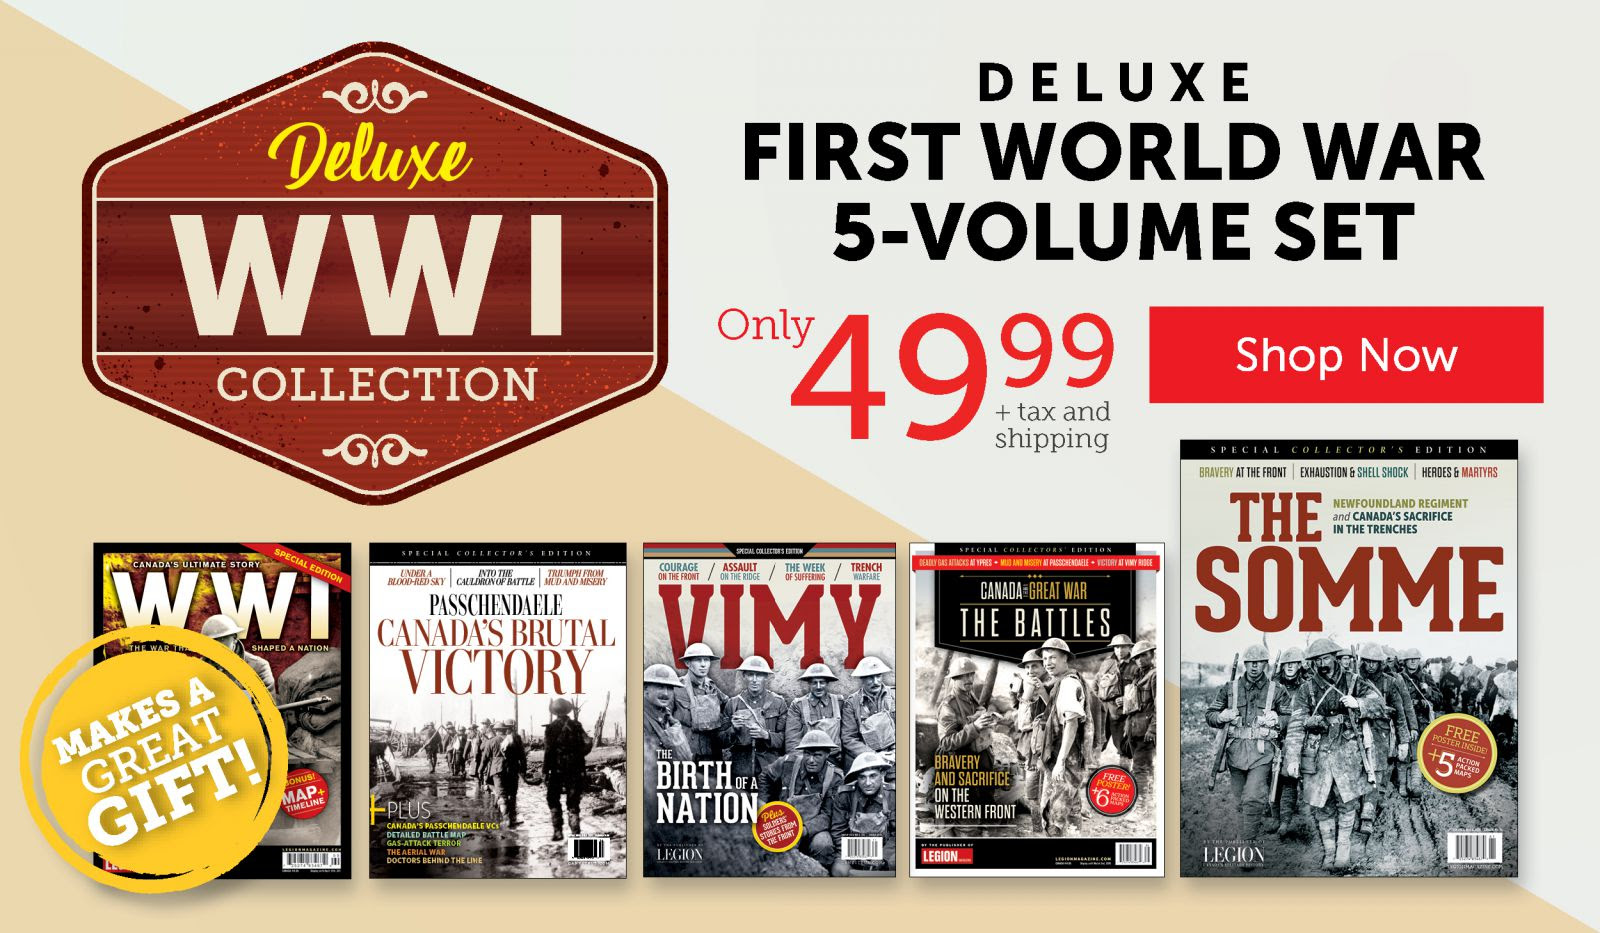 WW I Collection 5-Volume Set